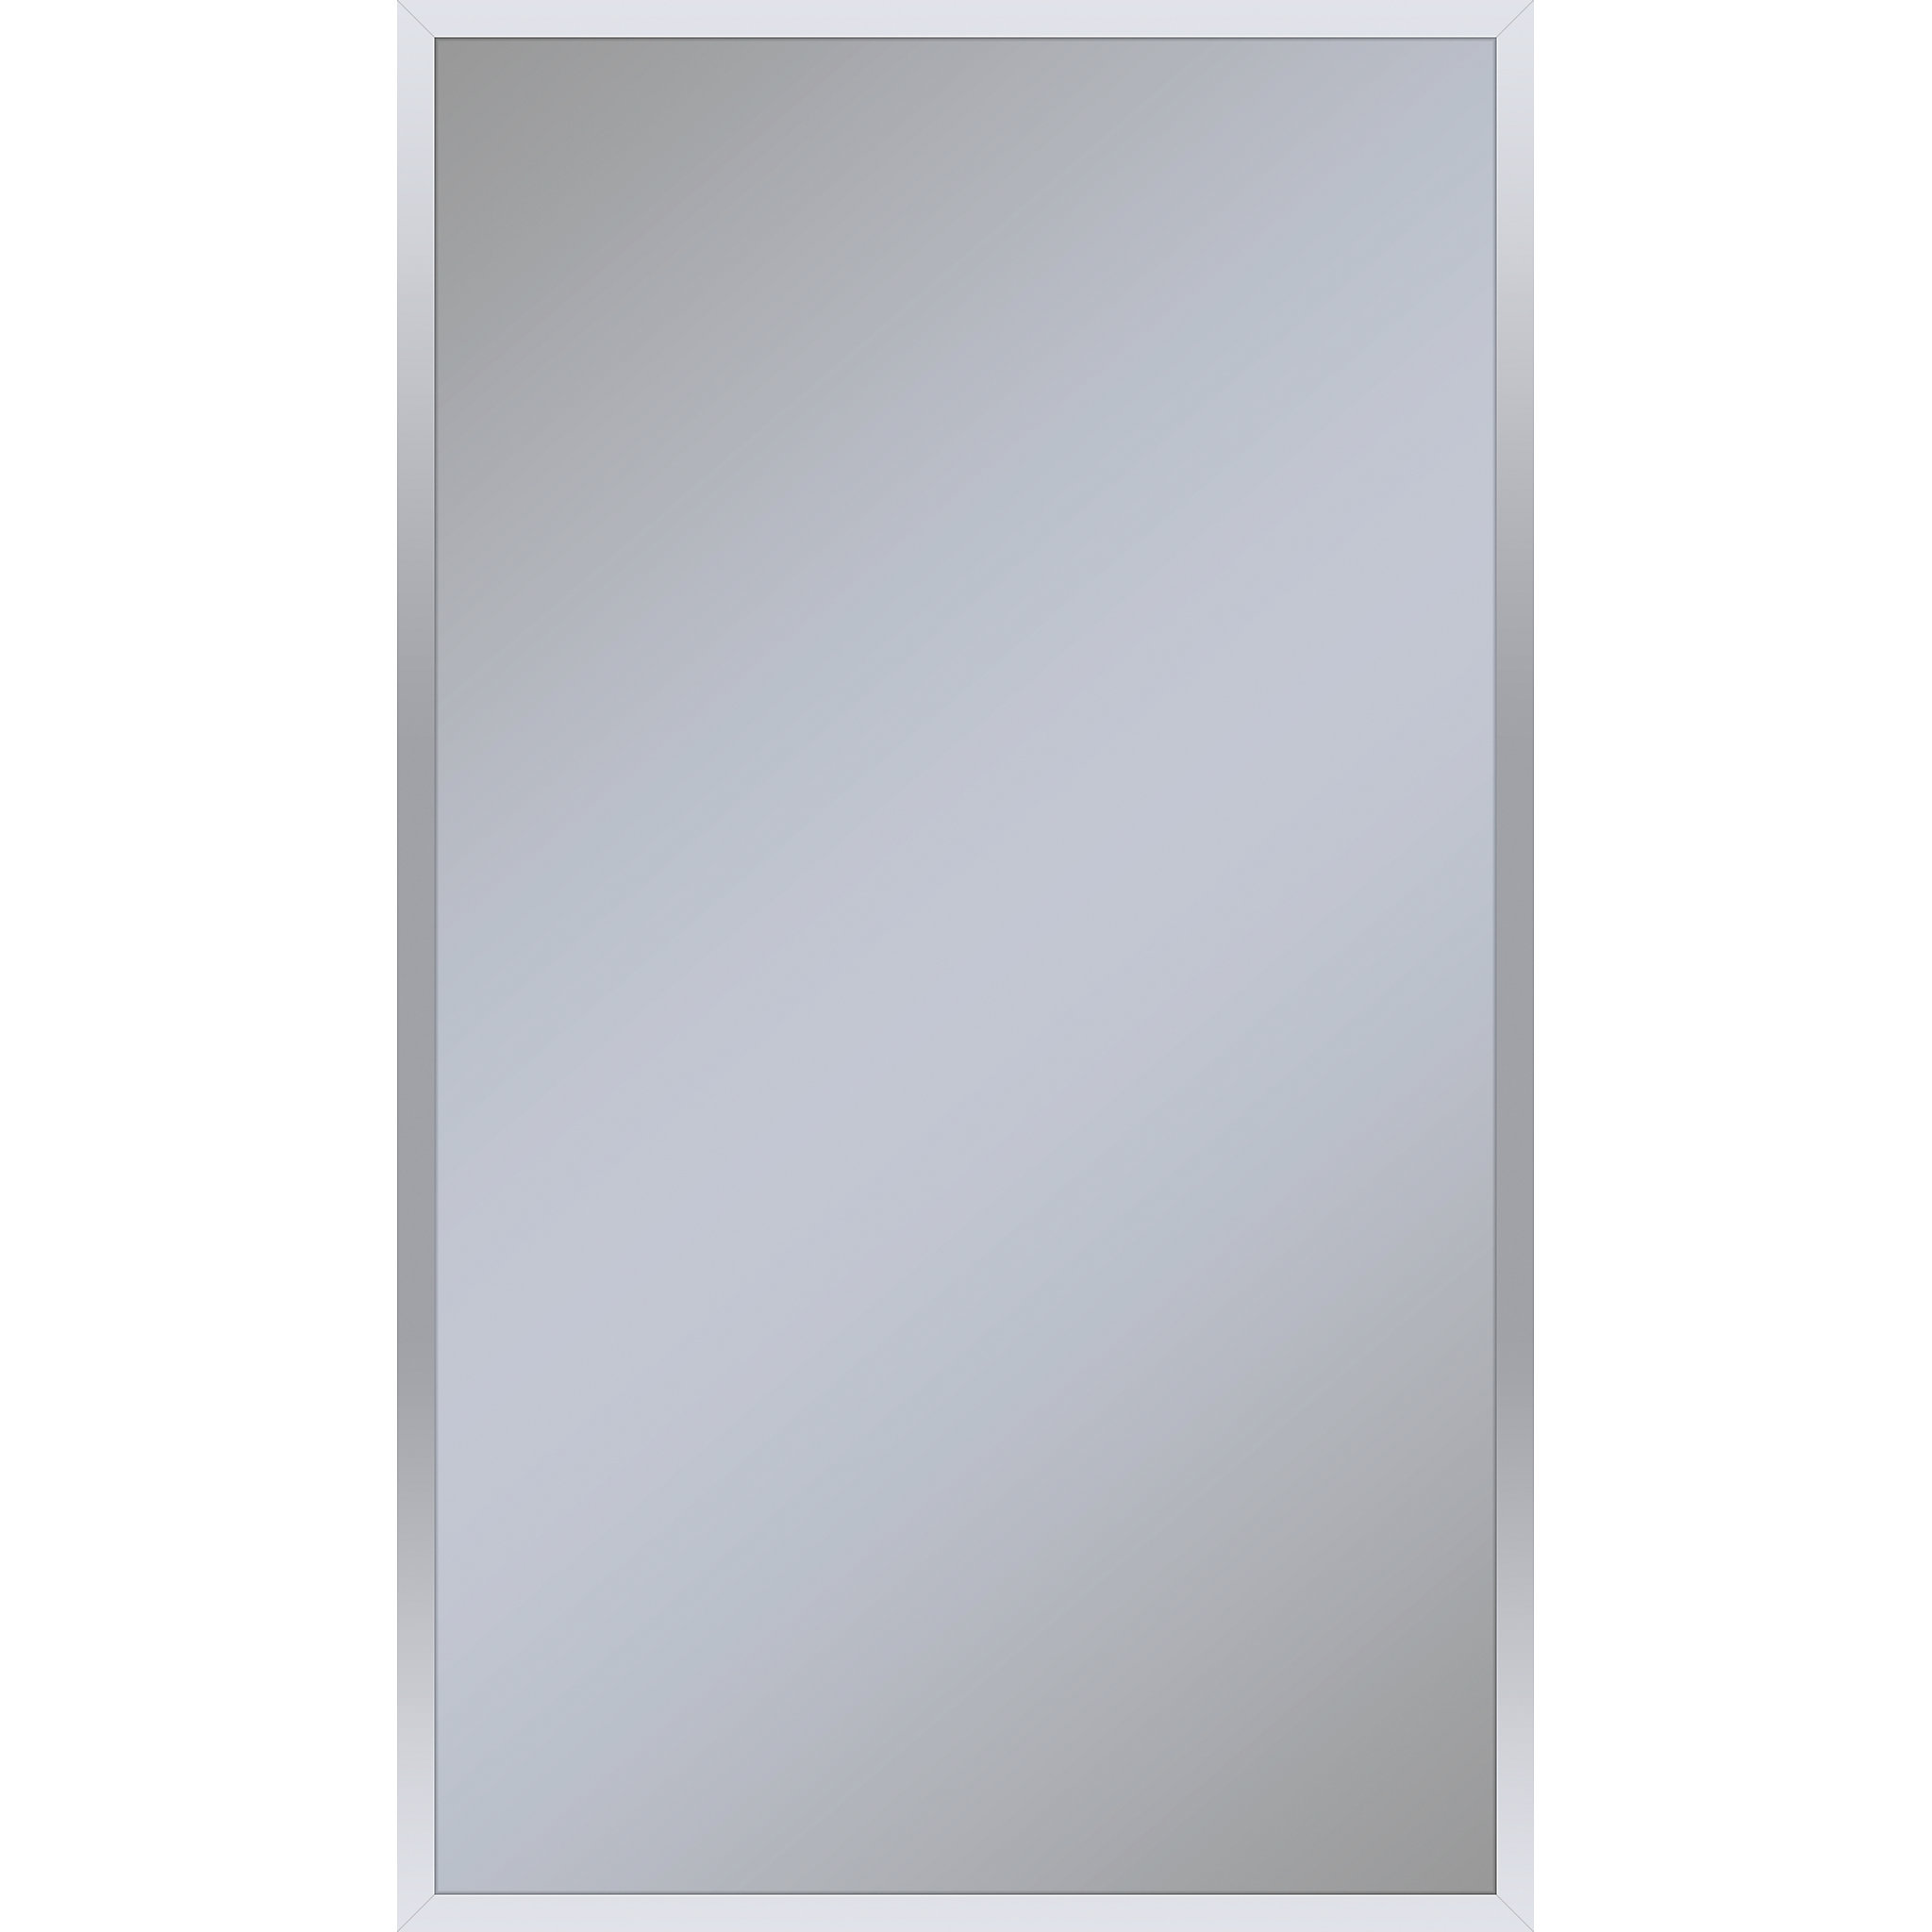 Robern PM2440T76Profiles Framed Mirror, 24" x 40" x 3/4", Chrome